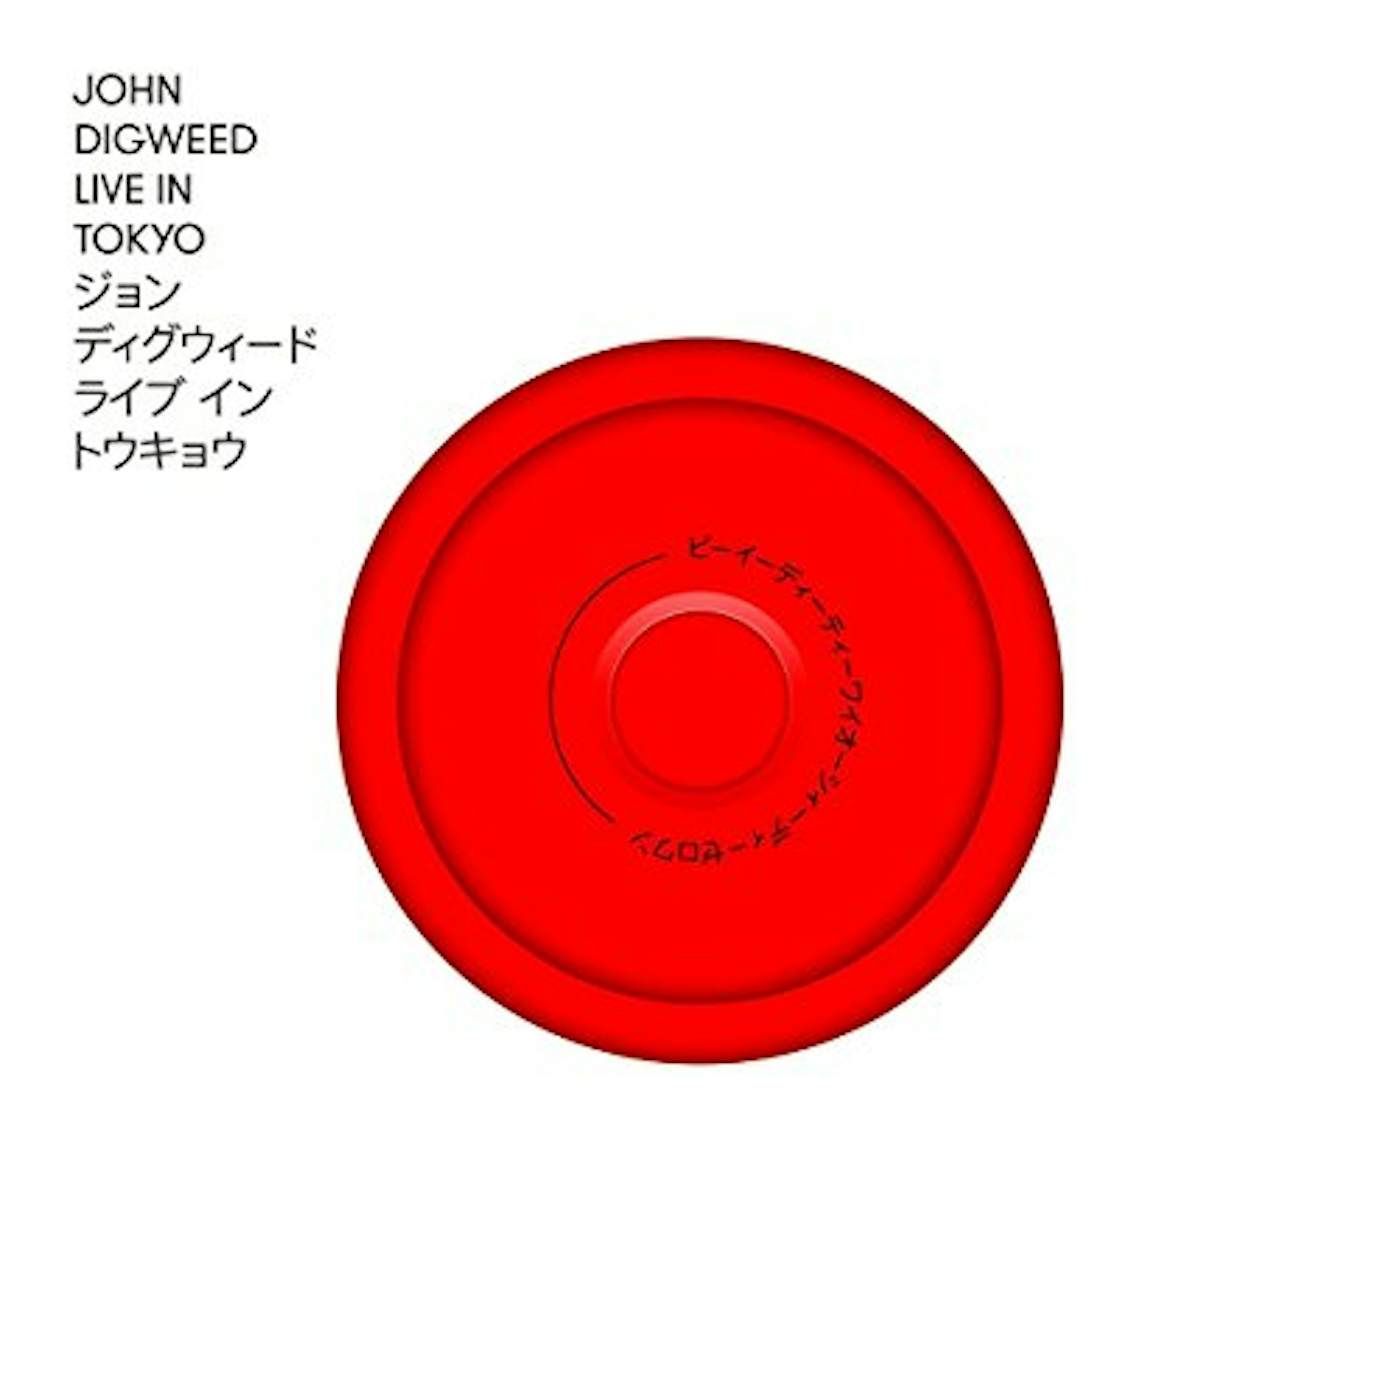 JOHN DIGWEED LIVE IN TOKYO CD